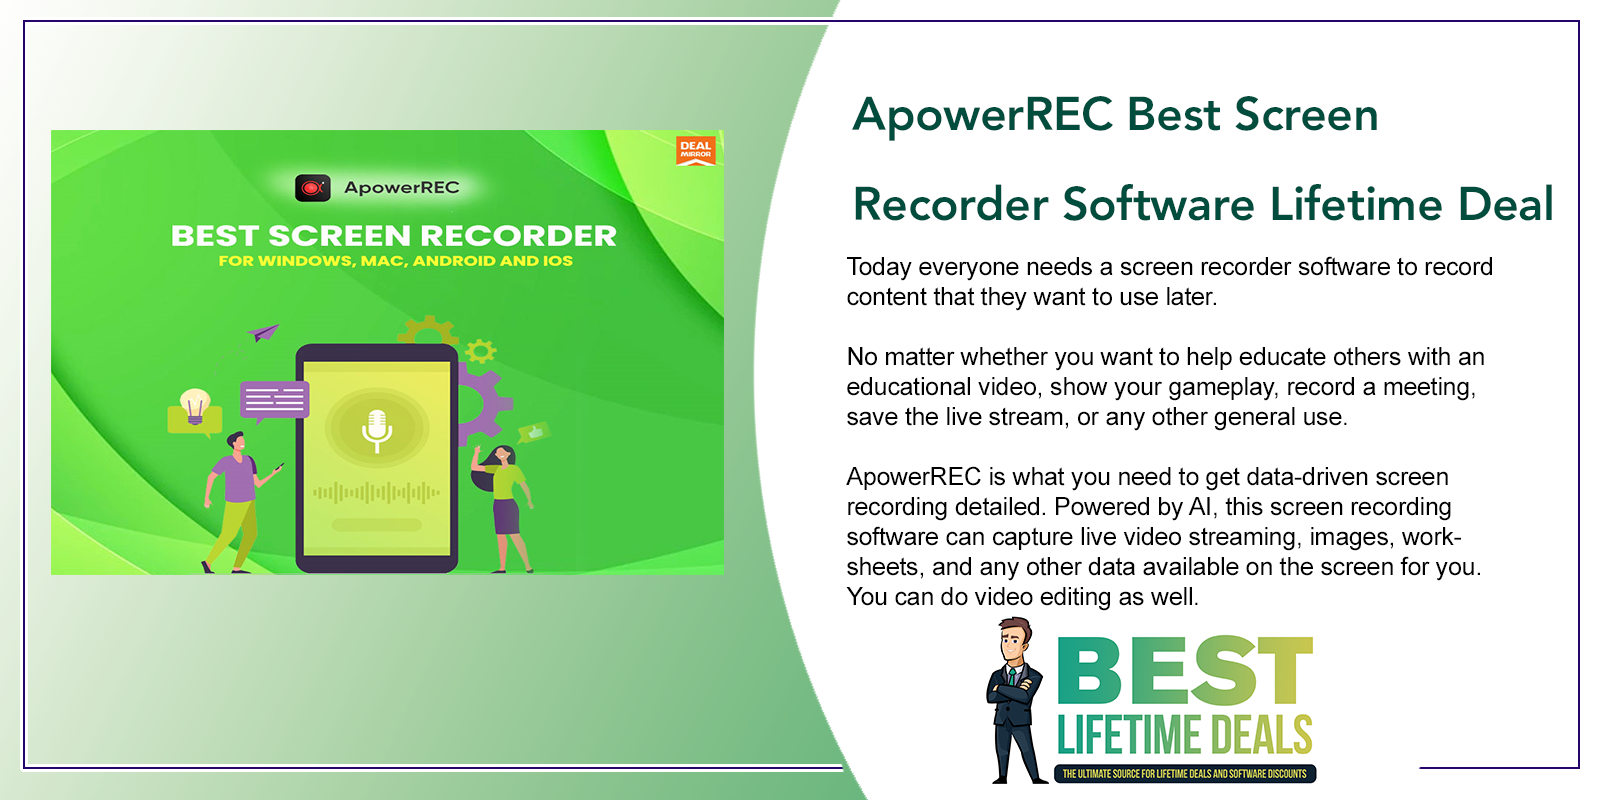 ApowerREC Best Screen Recorder Software Lifetime Deal Featured Image